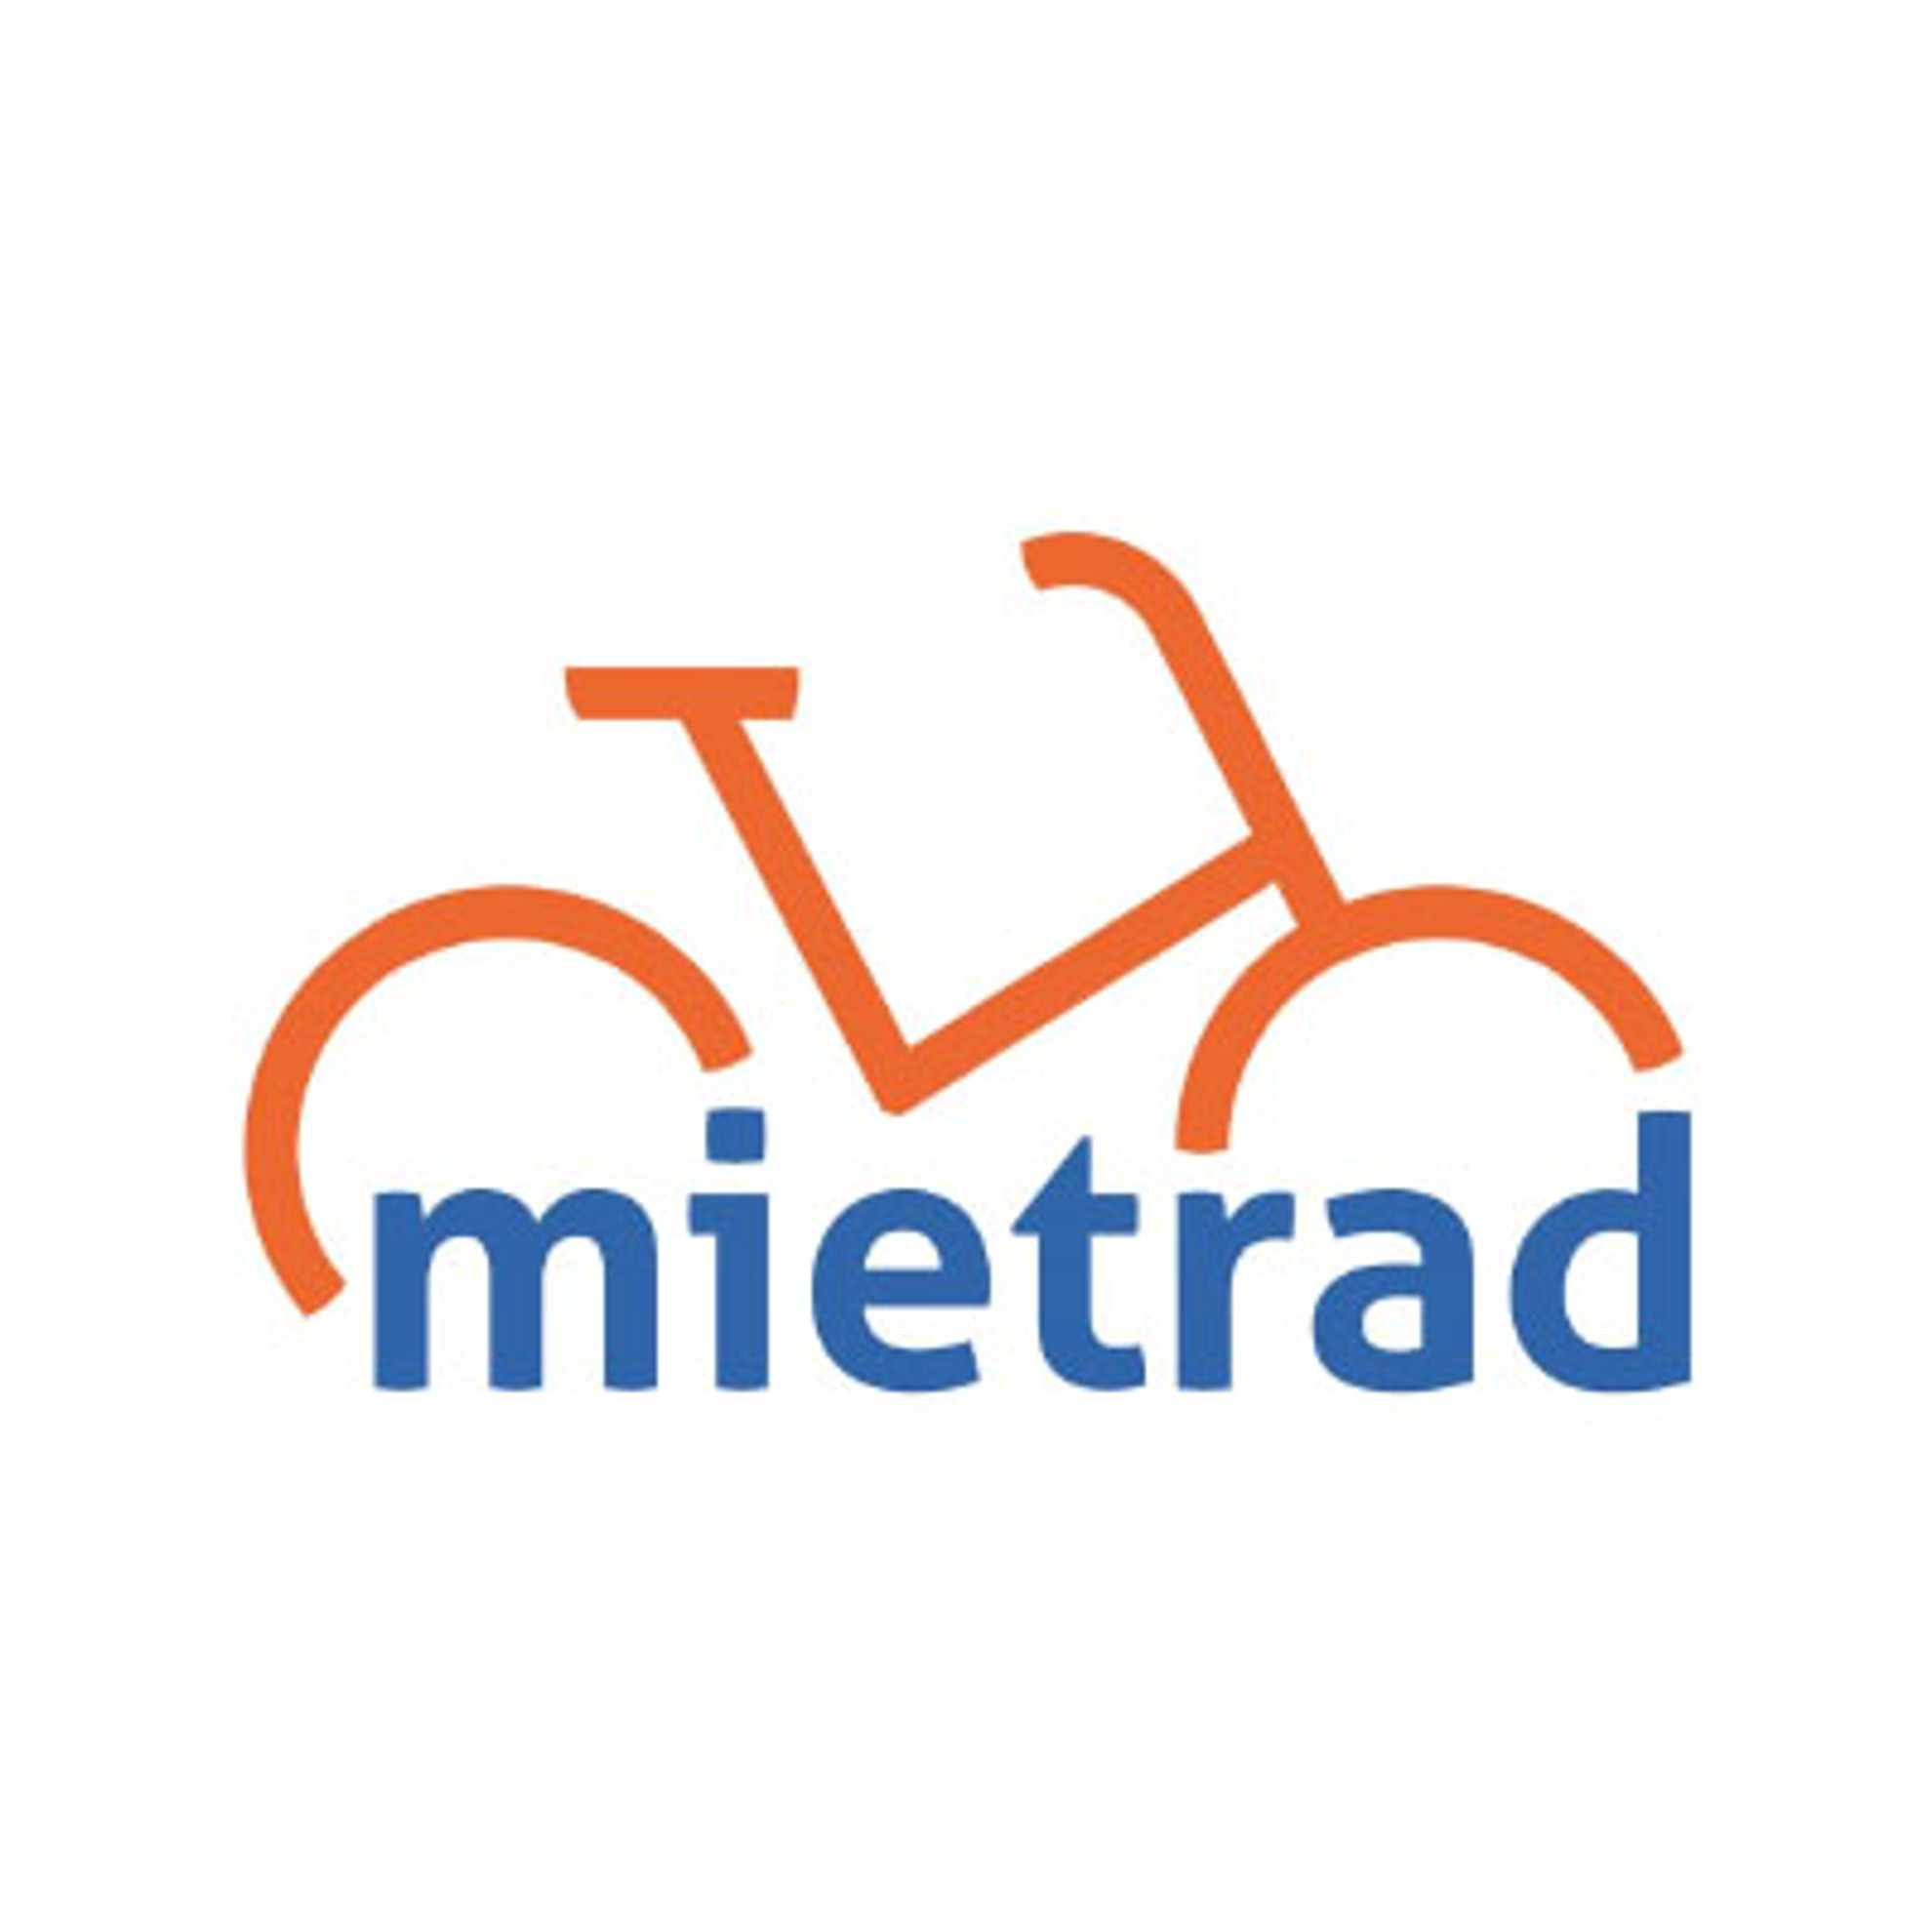 mietrad-fahrradverleih-logo.jpg